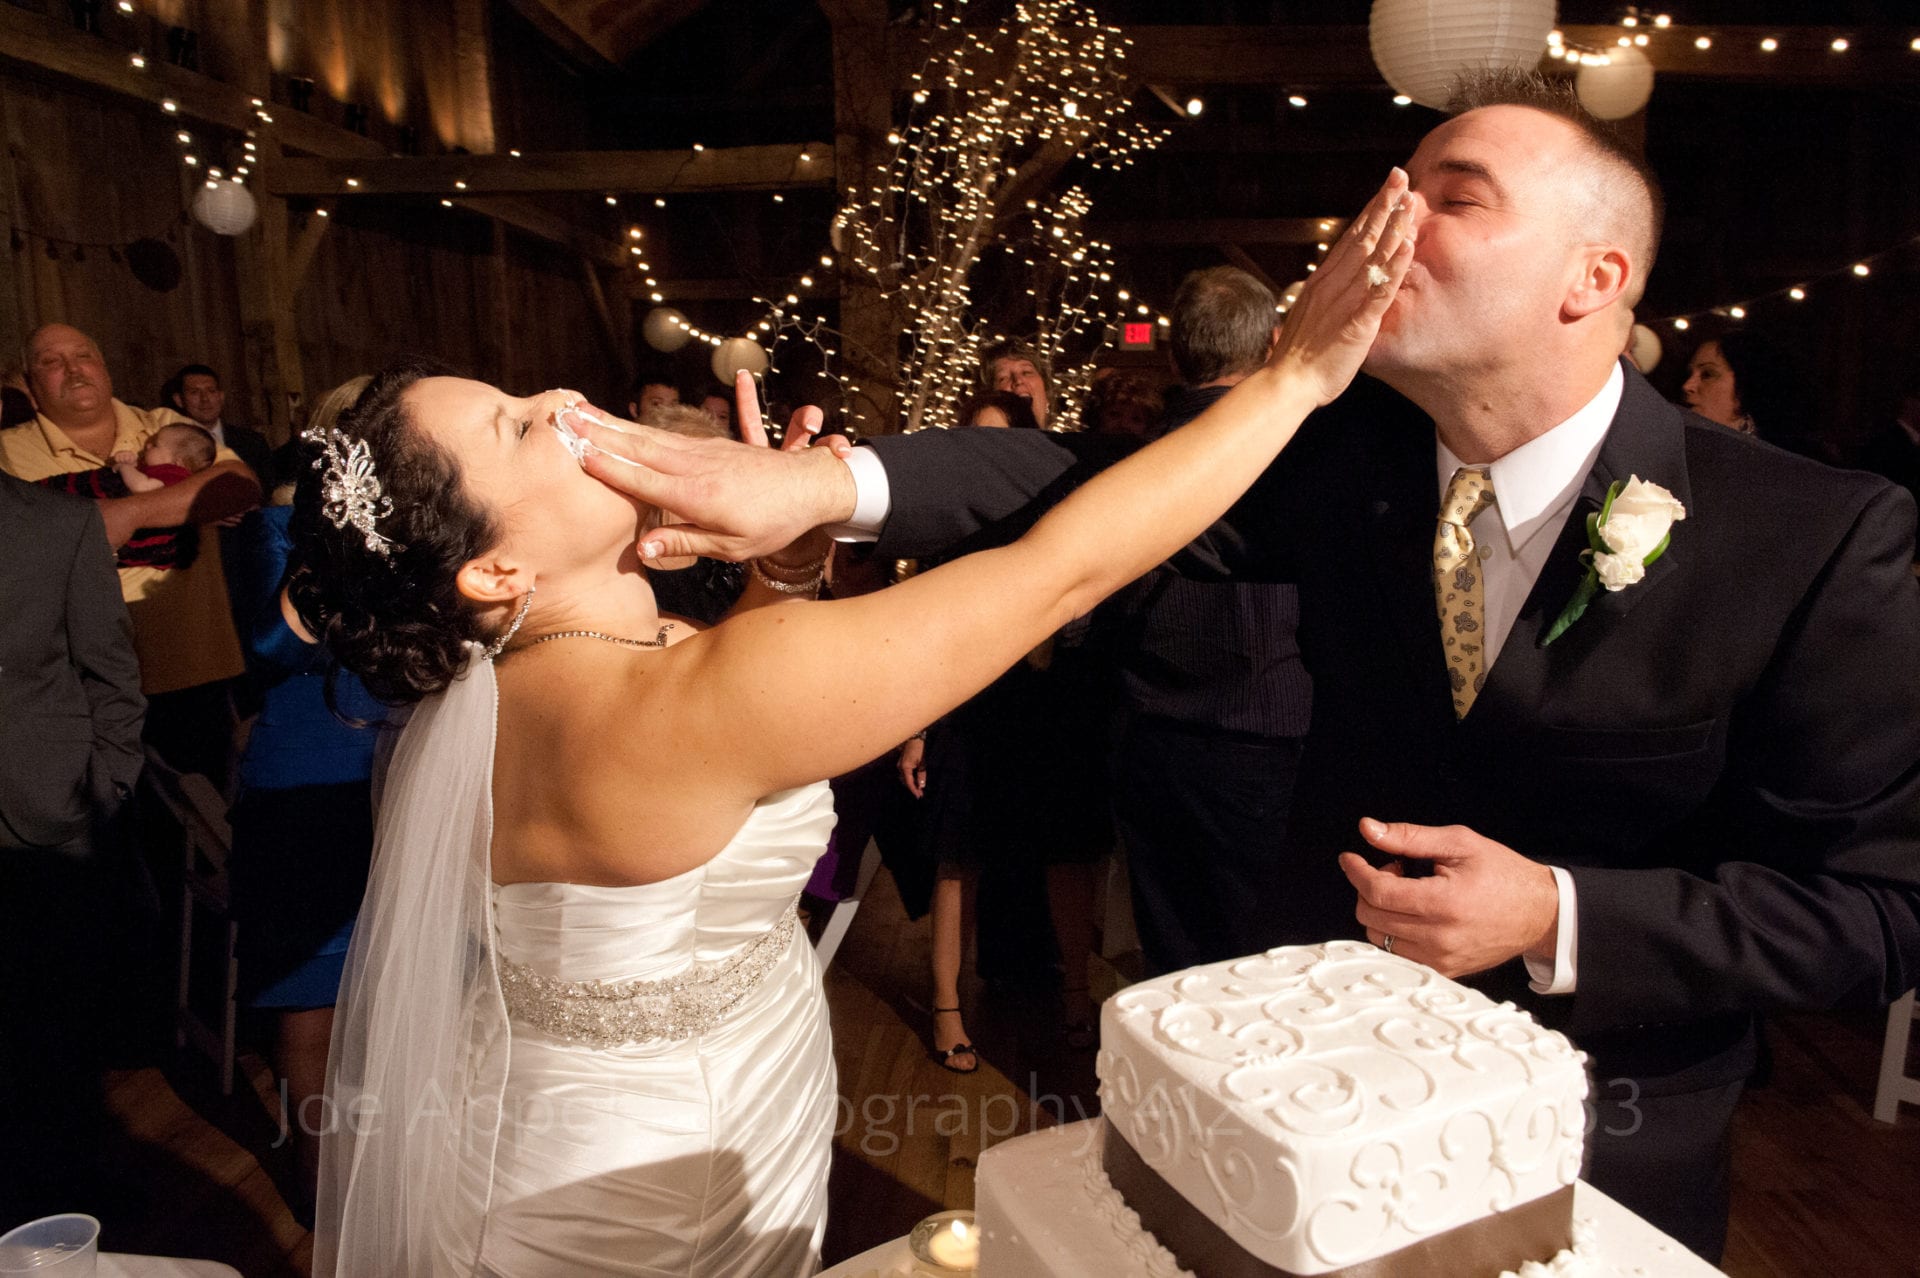 A bride and groom smash wedding cake into each other's faces. Armstrong Farms Weddings